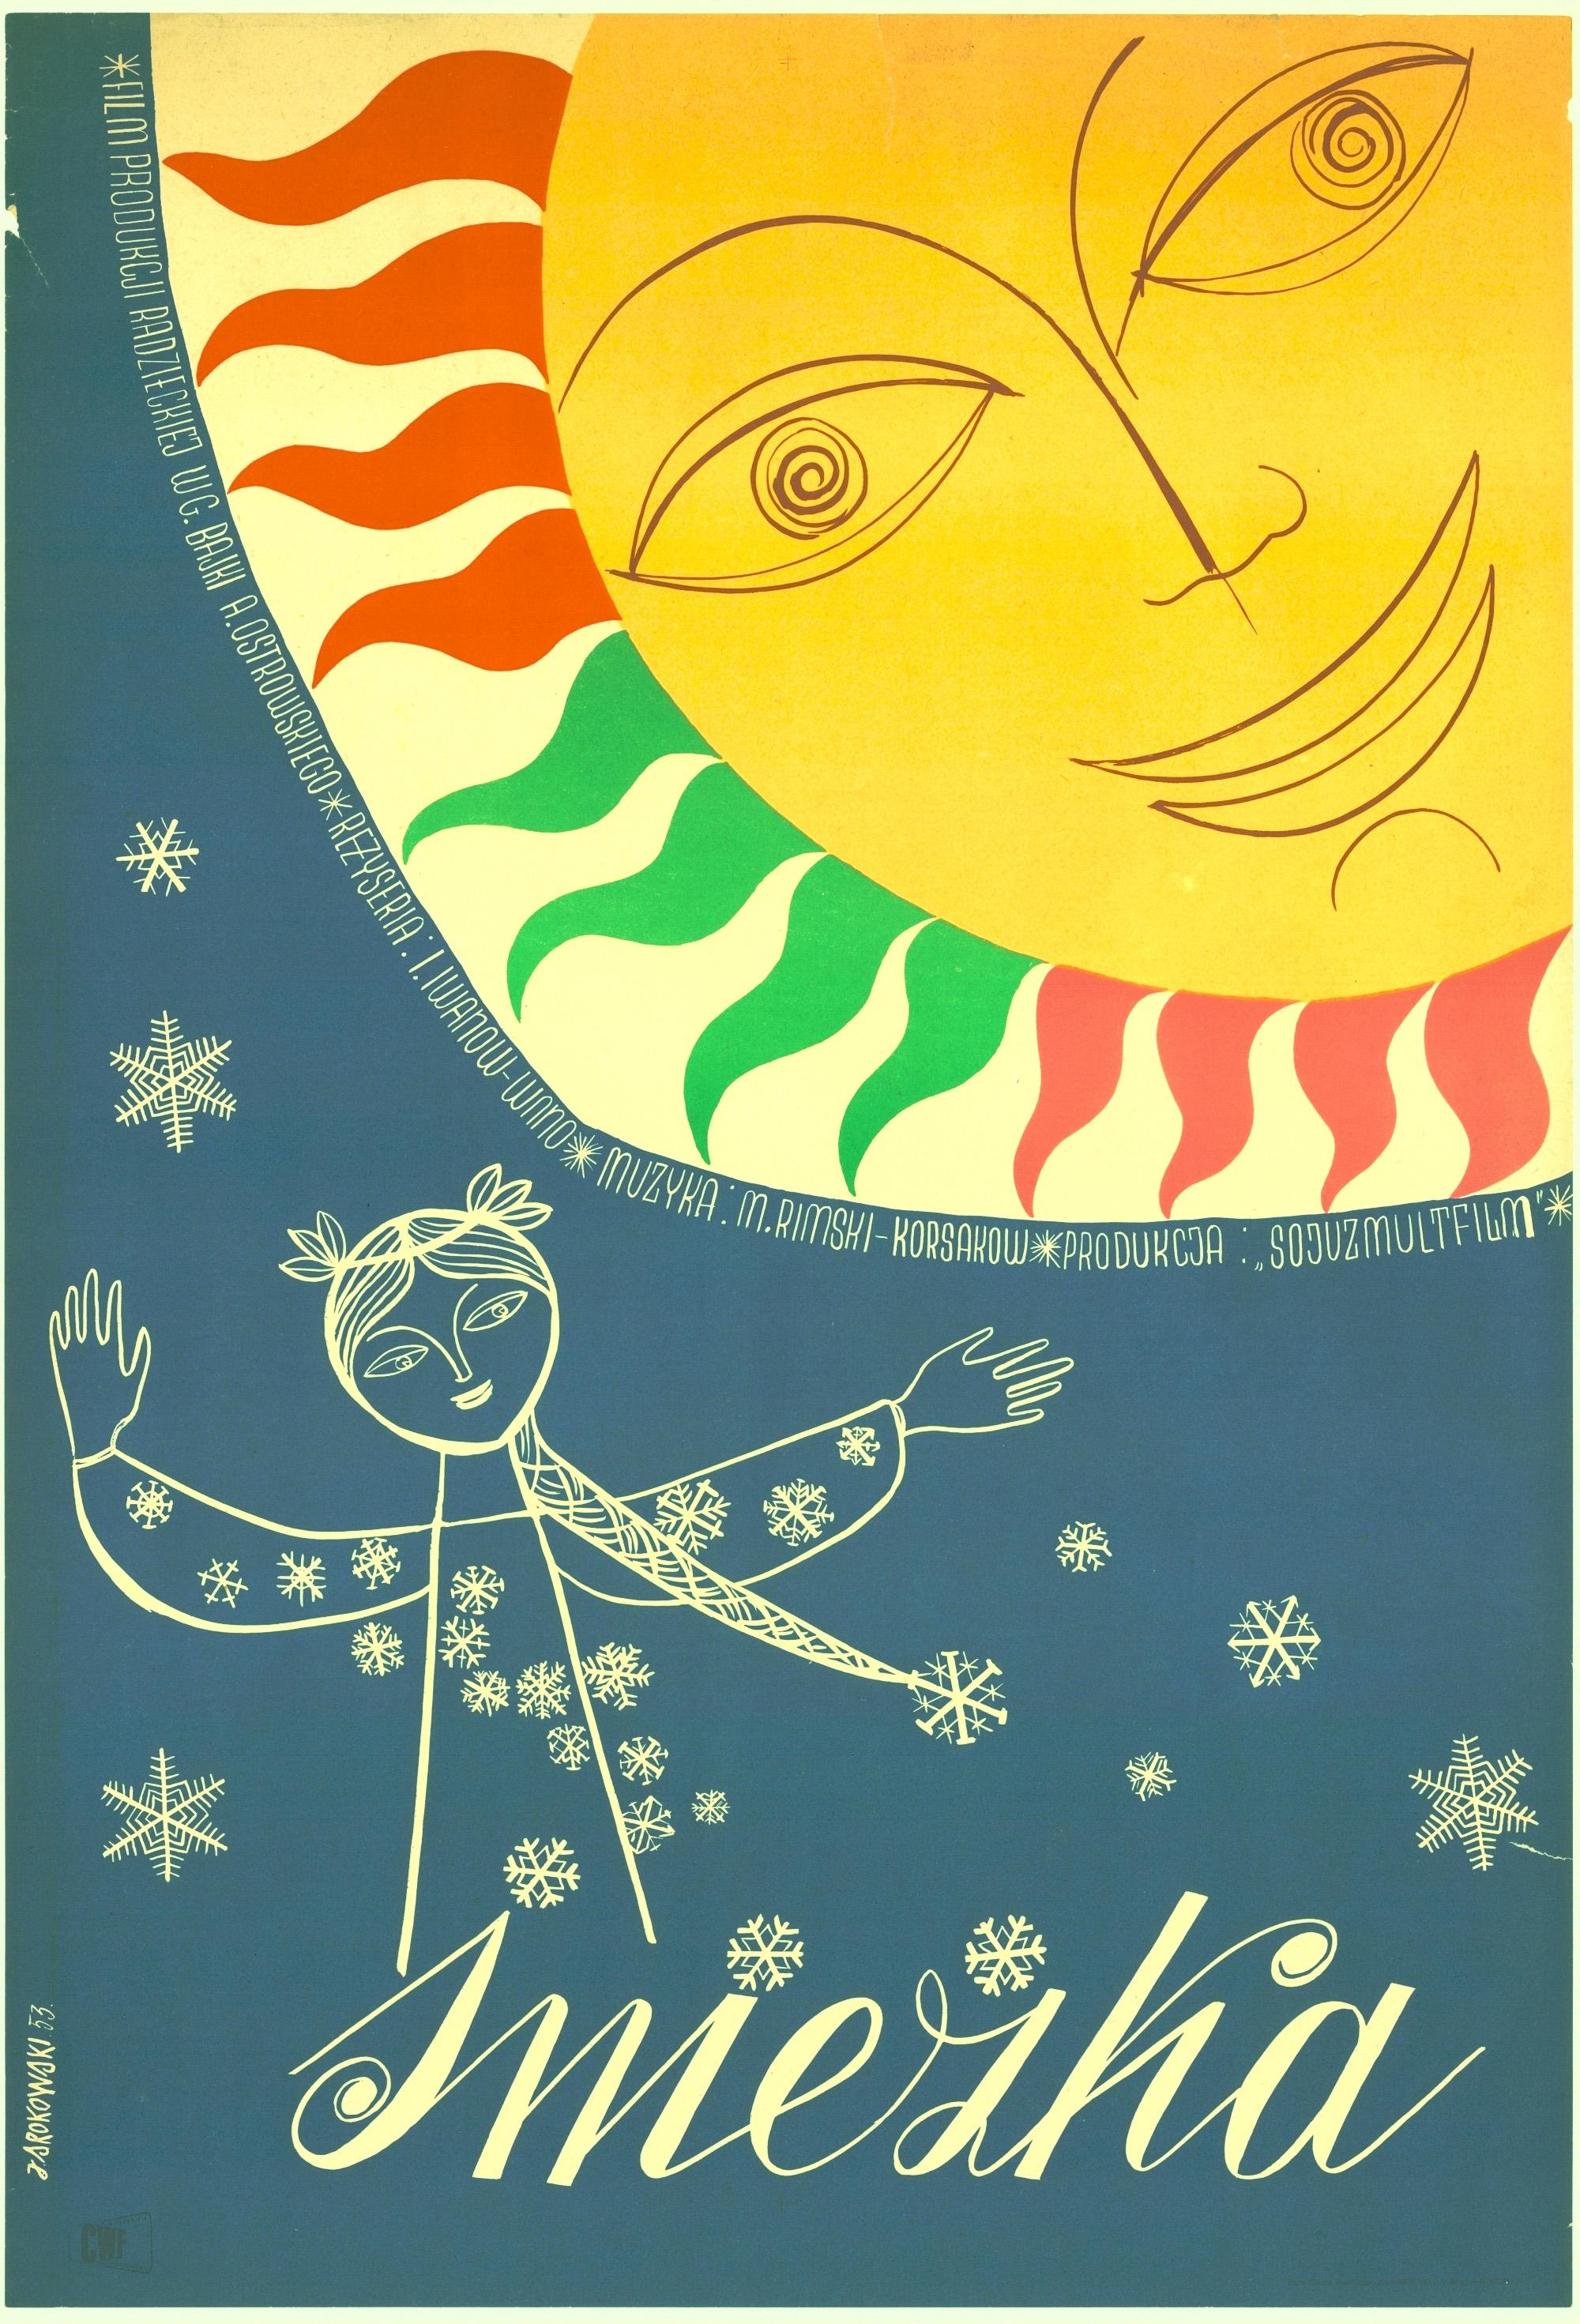 Other Original Polish Sniezka 'Snowball' Poster, 1950s by Jery Srokowski For Sale